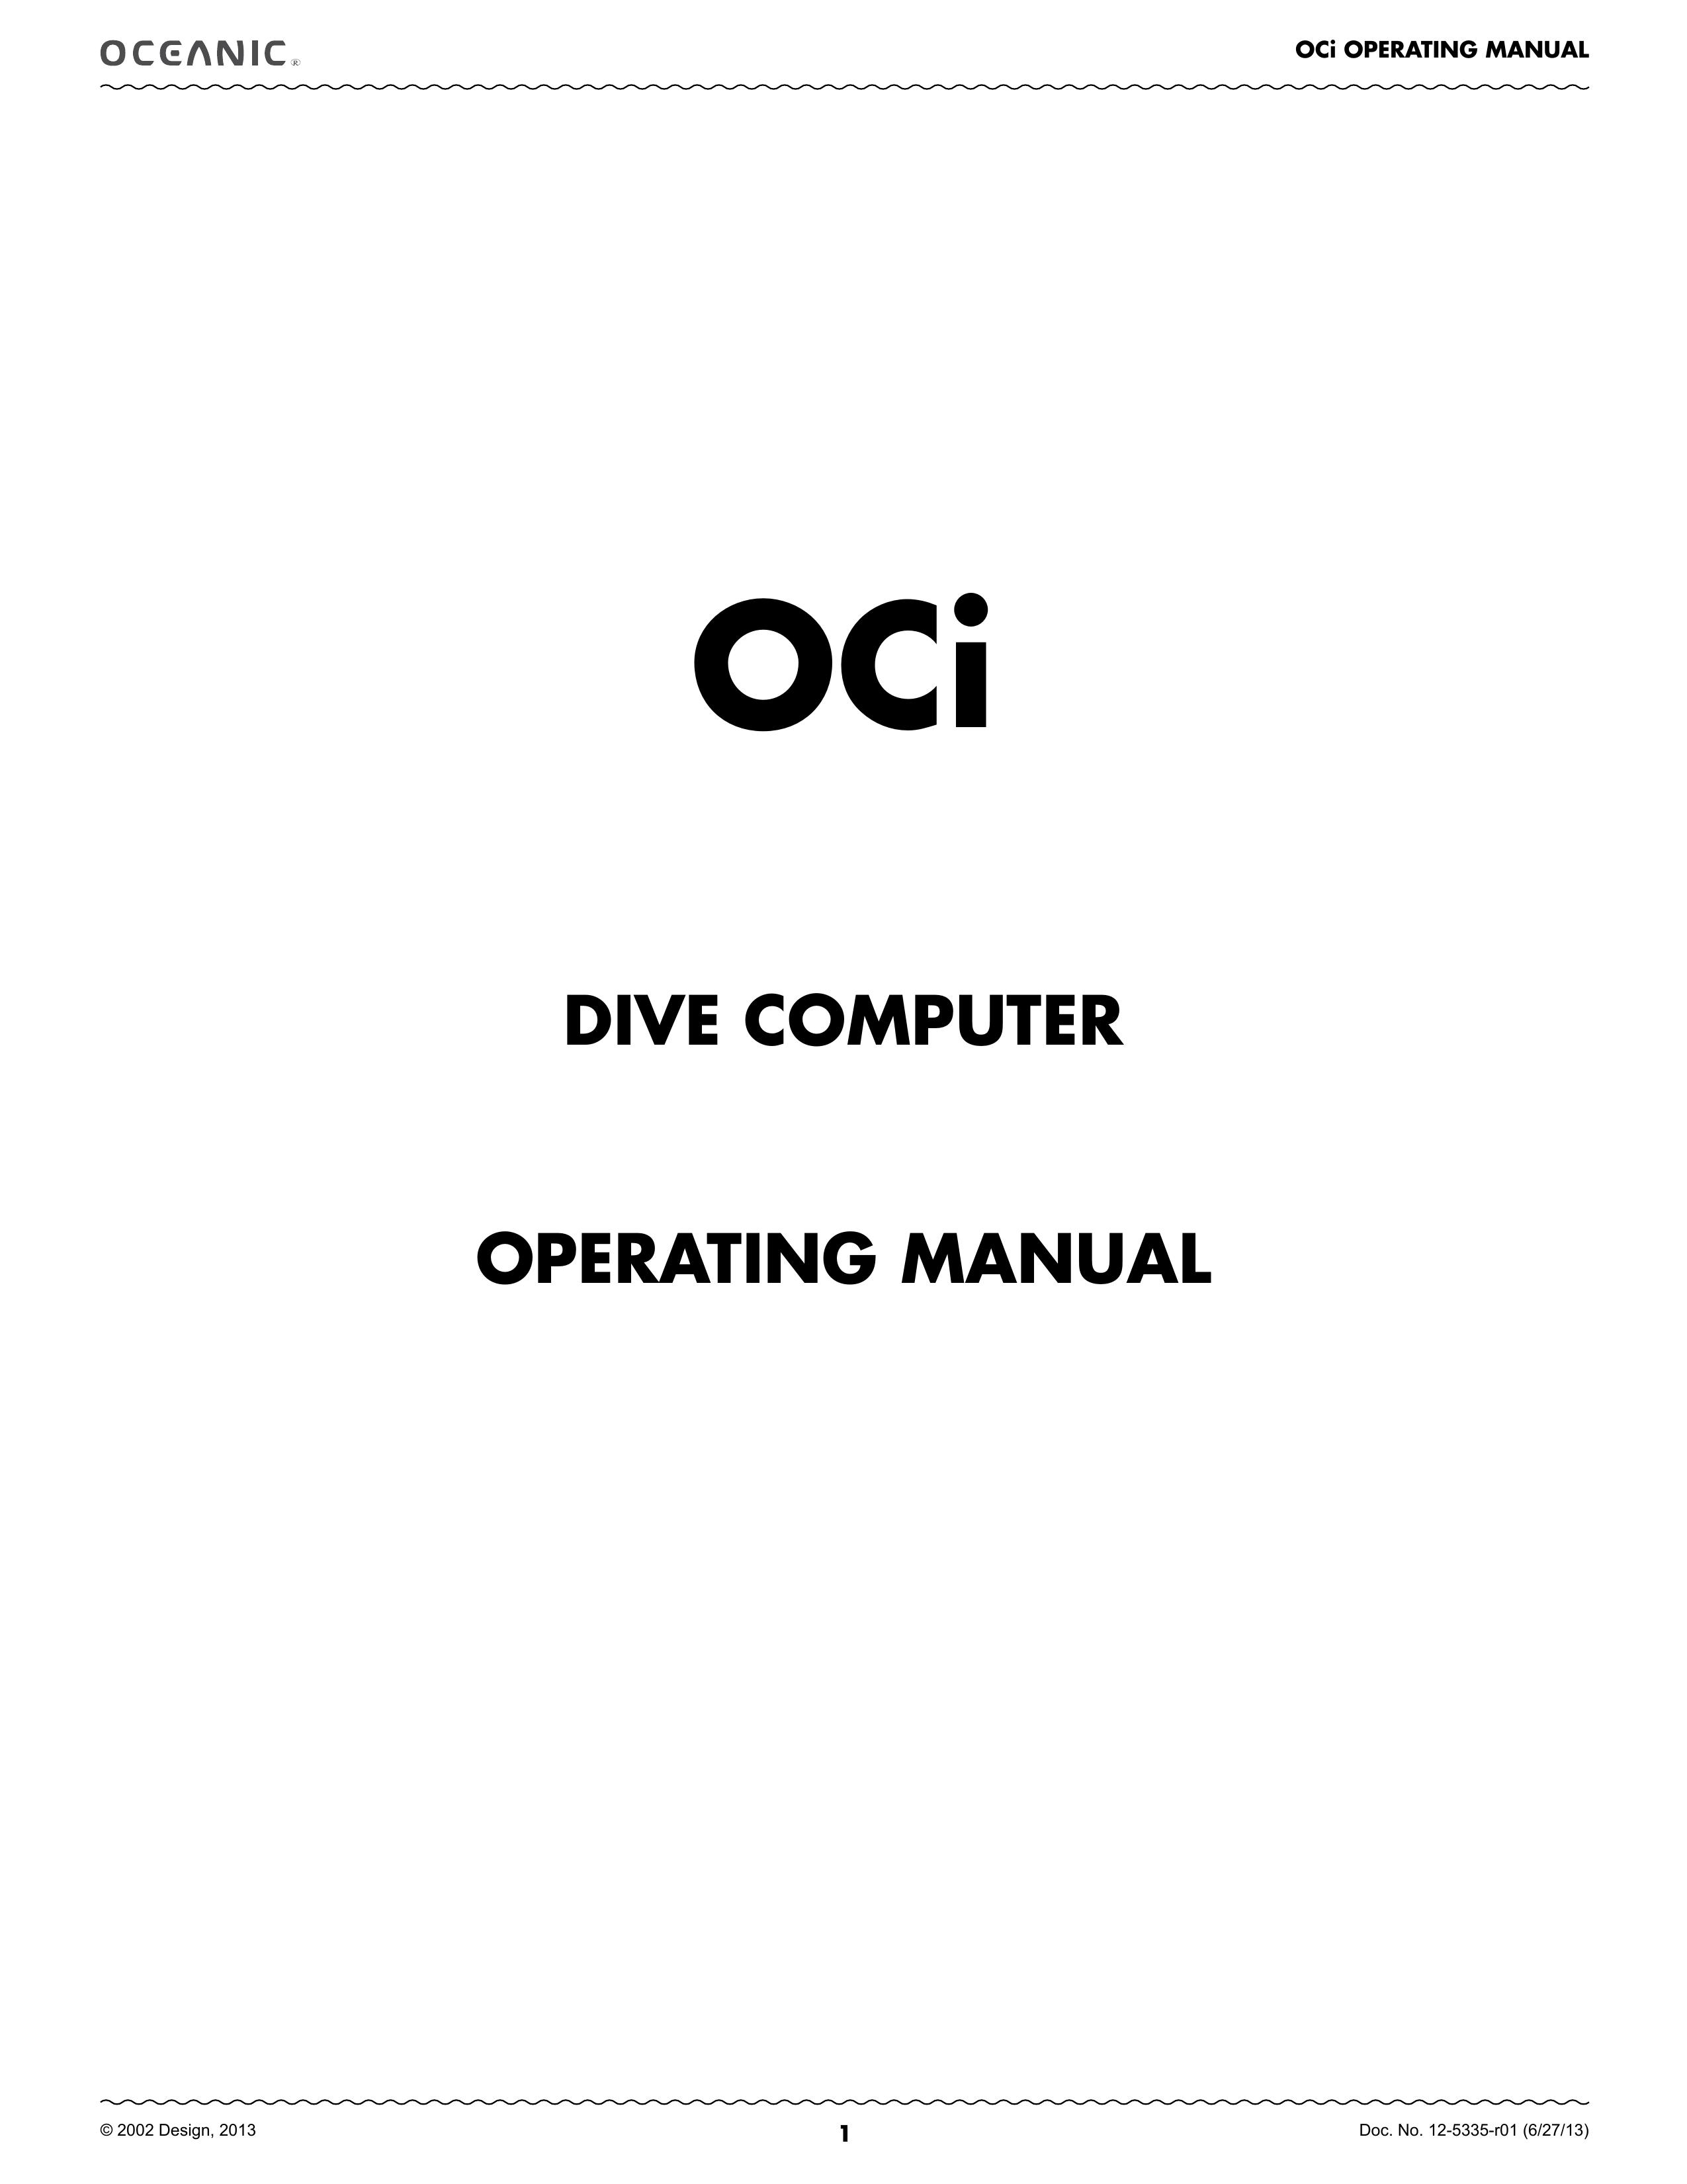 Oceanic 04-8792-36 Scuba Diving Equipment User Manual